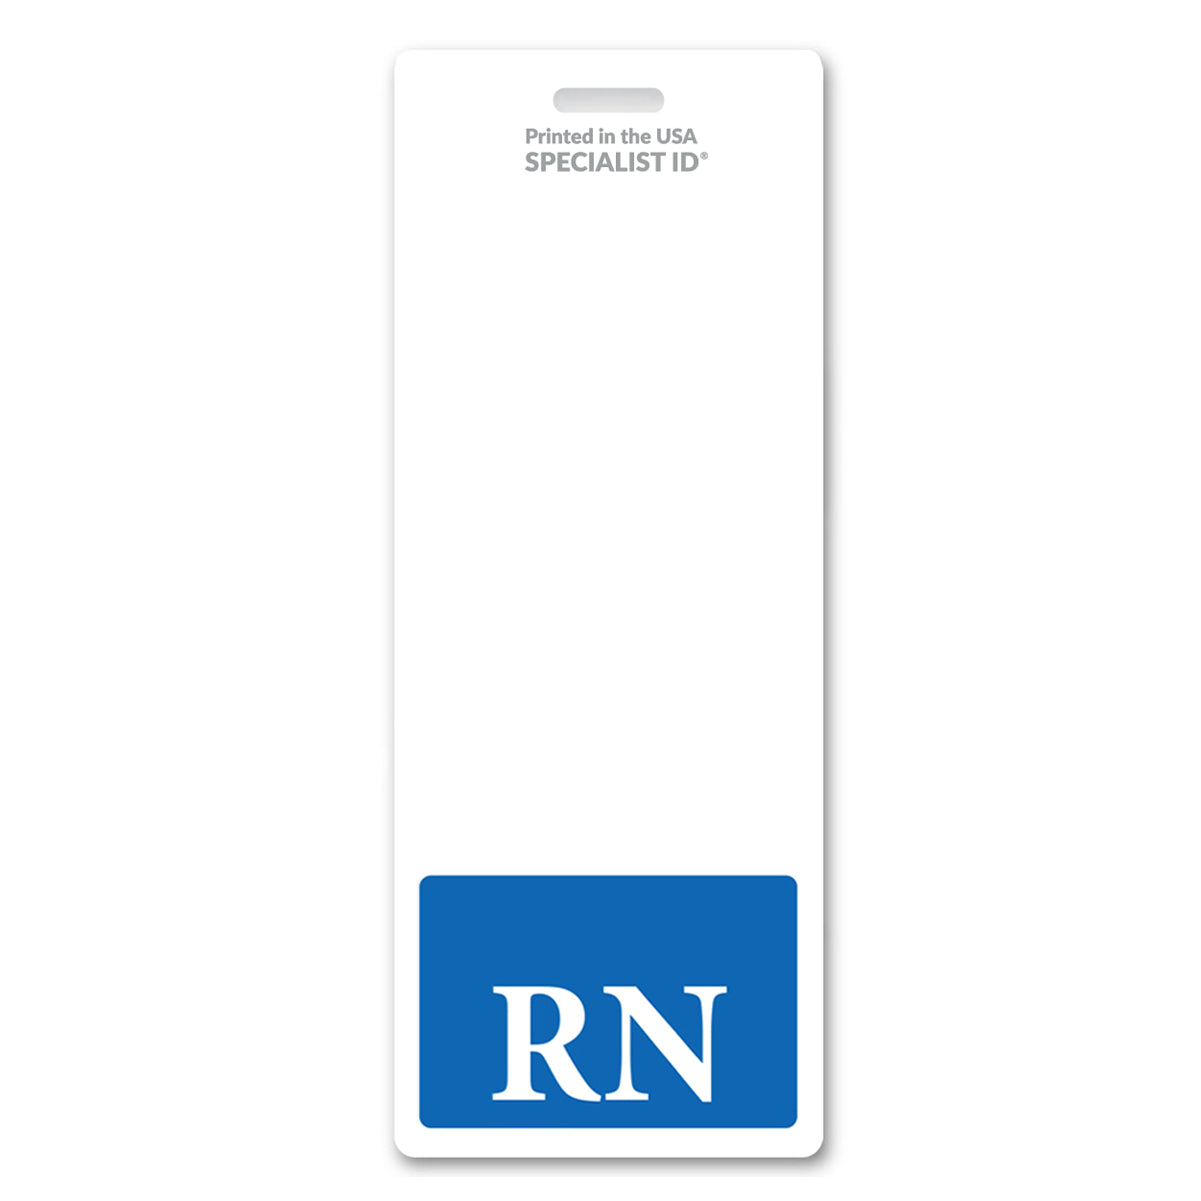 Oversized RN Badge Buddy - Extra Long ID Badge Buddy for Nurses with Blue Border